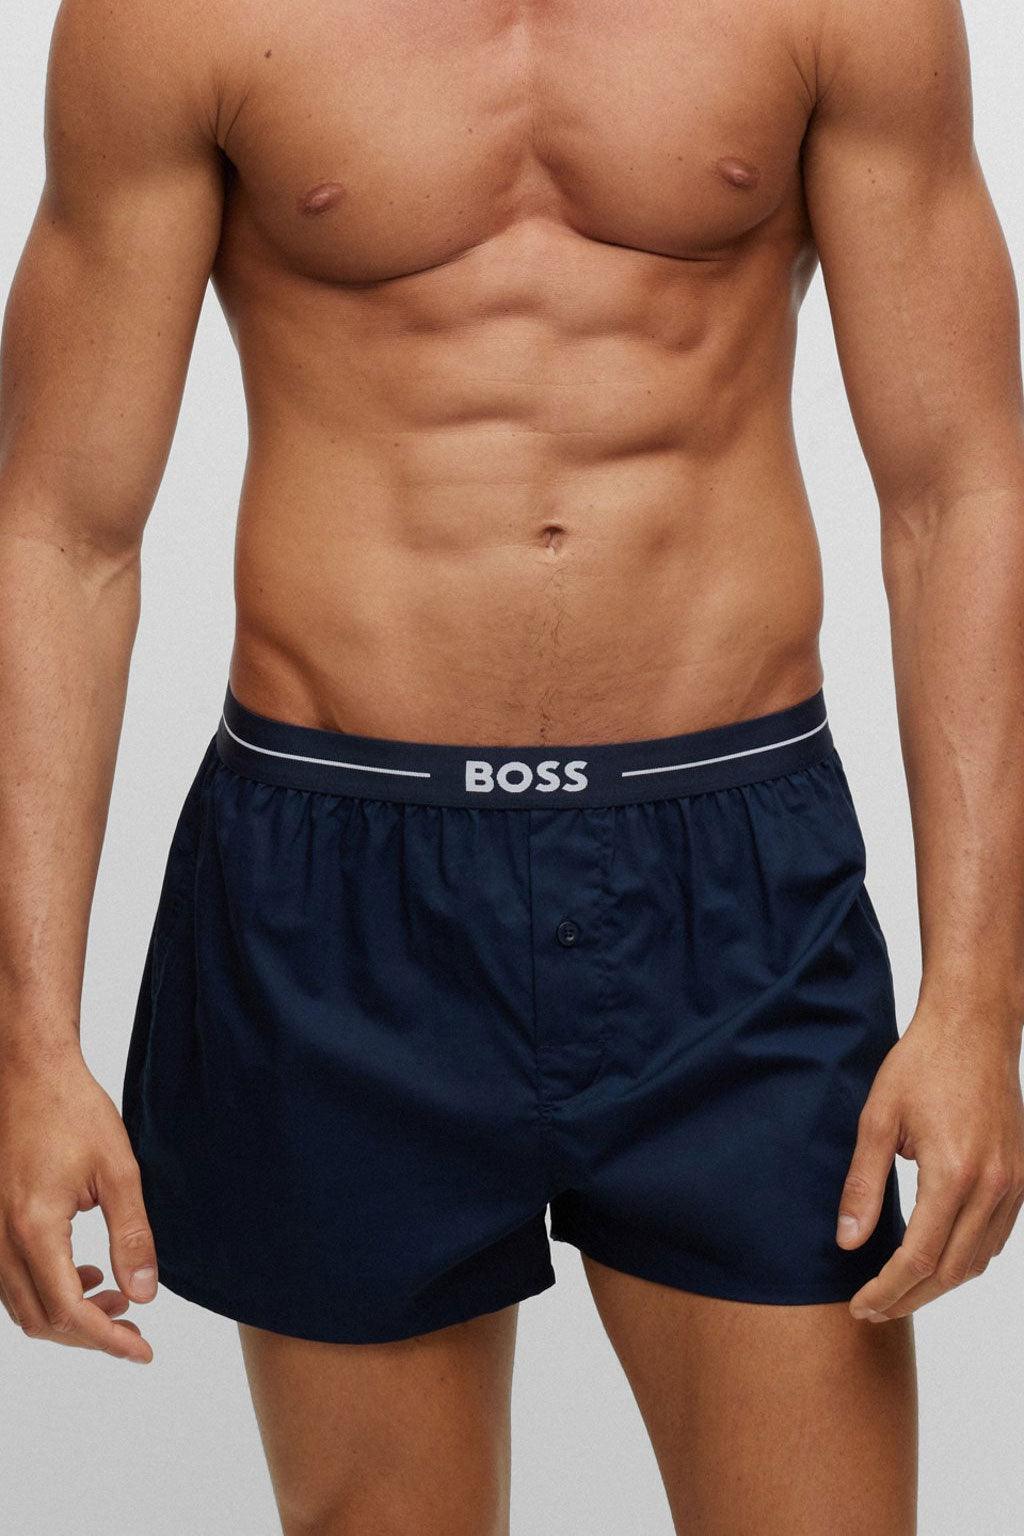 Hugo Boss underwear - Big Boss | the menswear concept